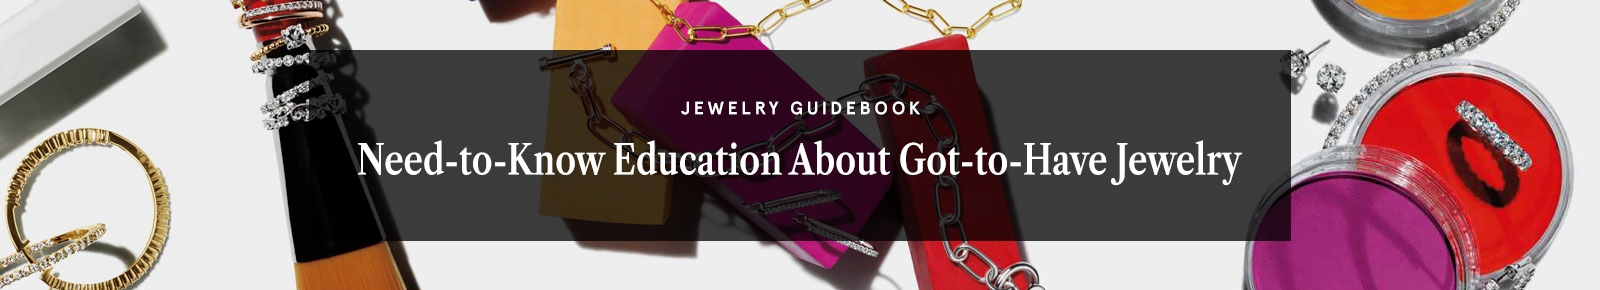 Zales Jewelry Guidebook